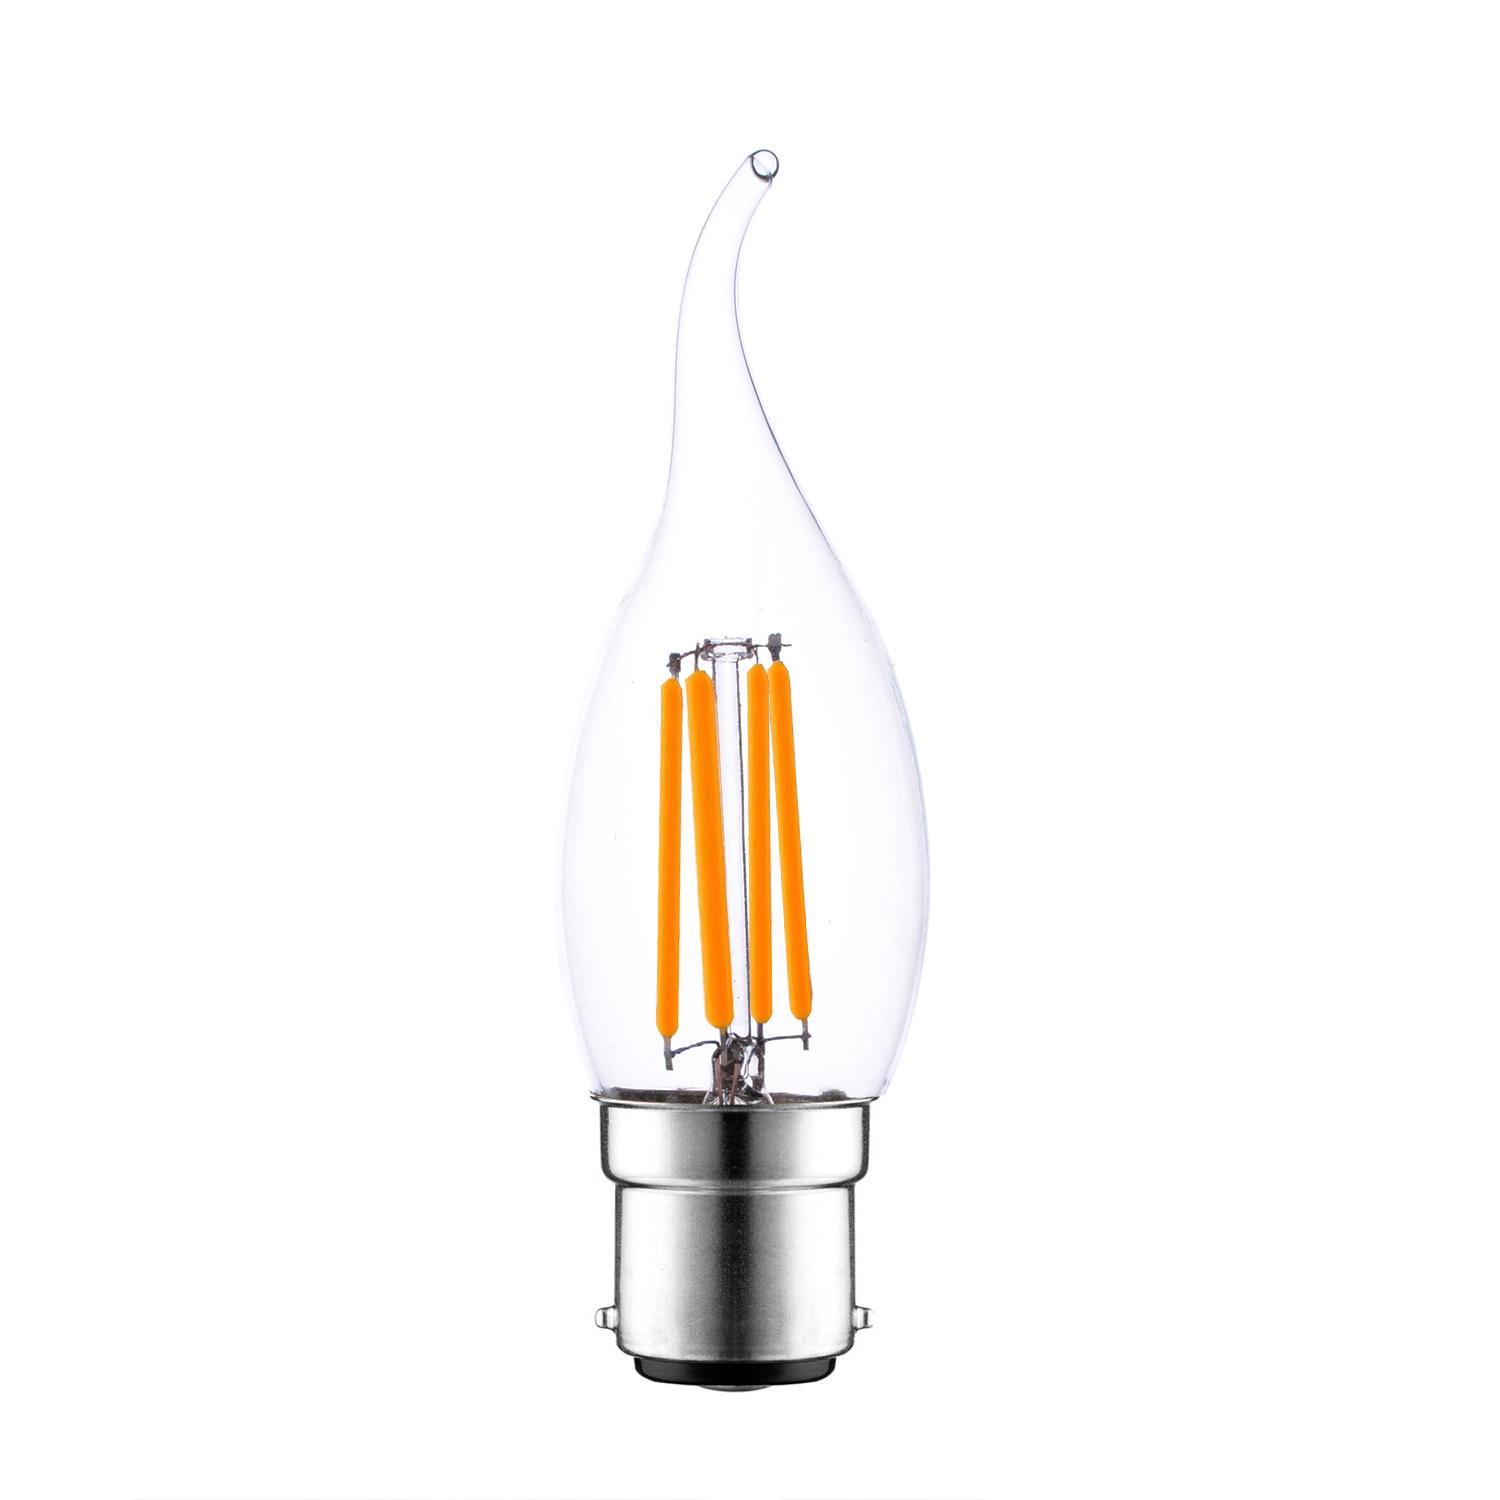 B22 LED Filmanet candle light bulbs